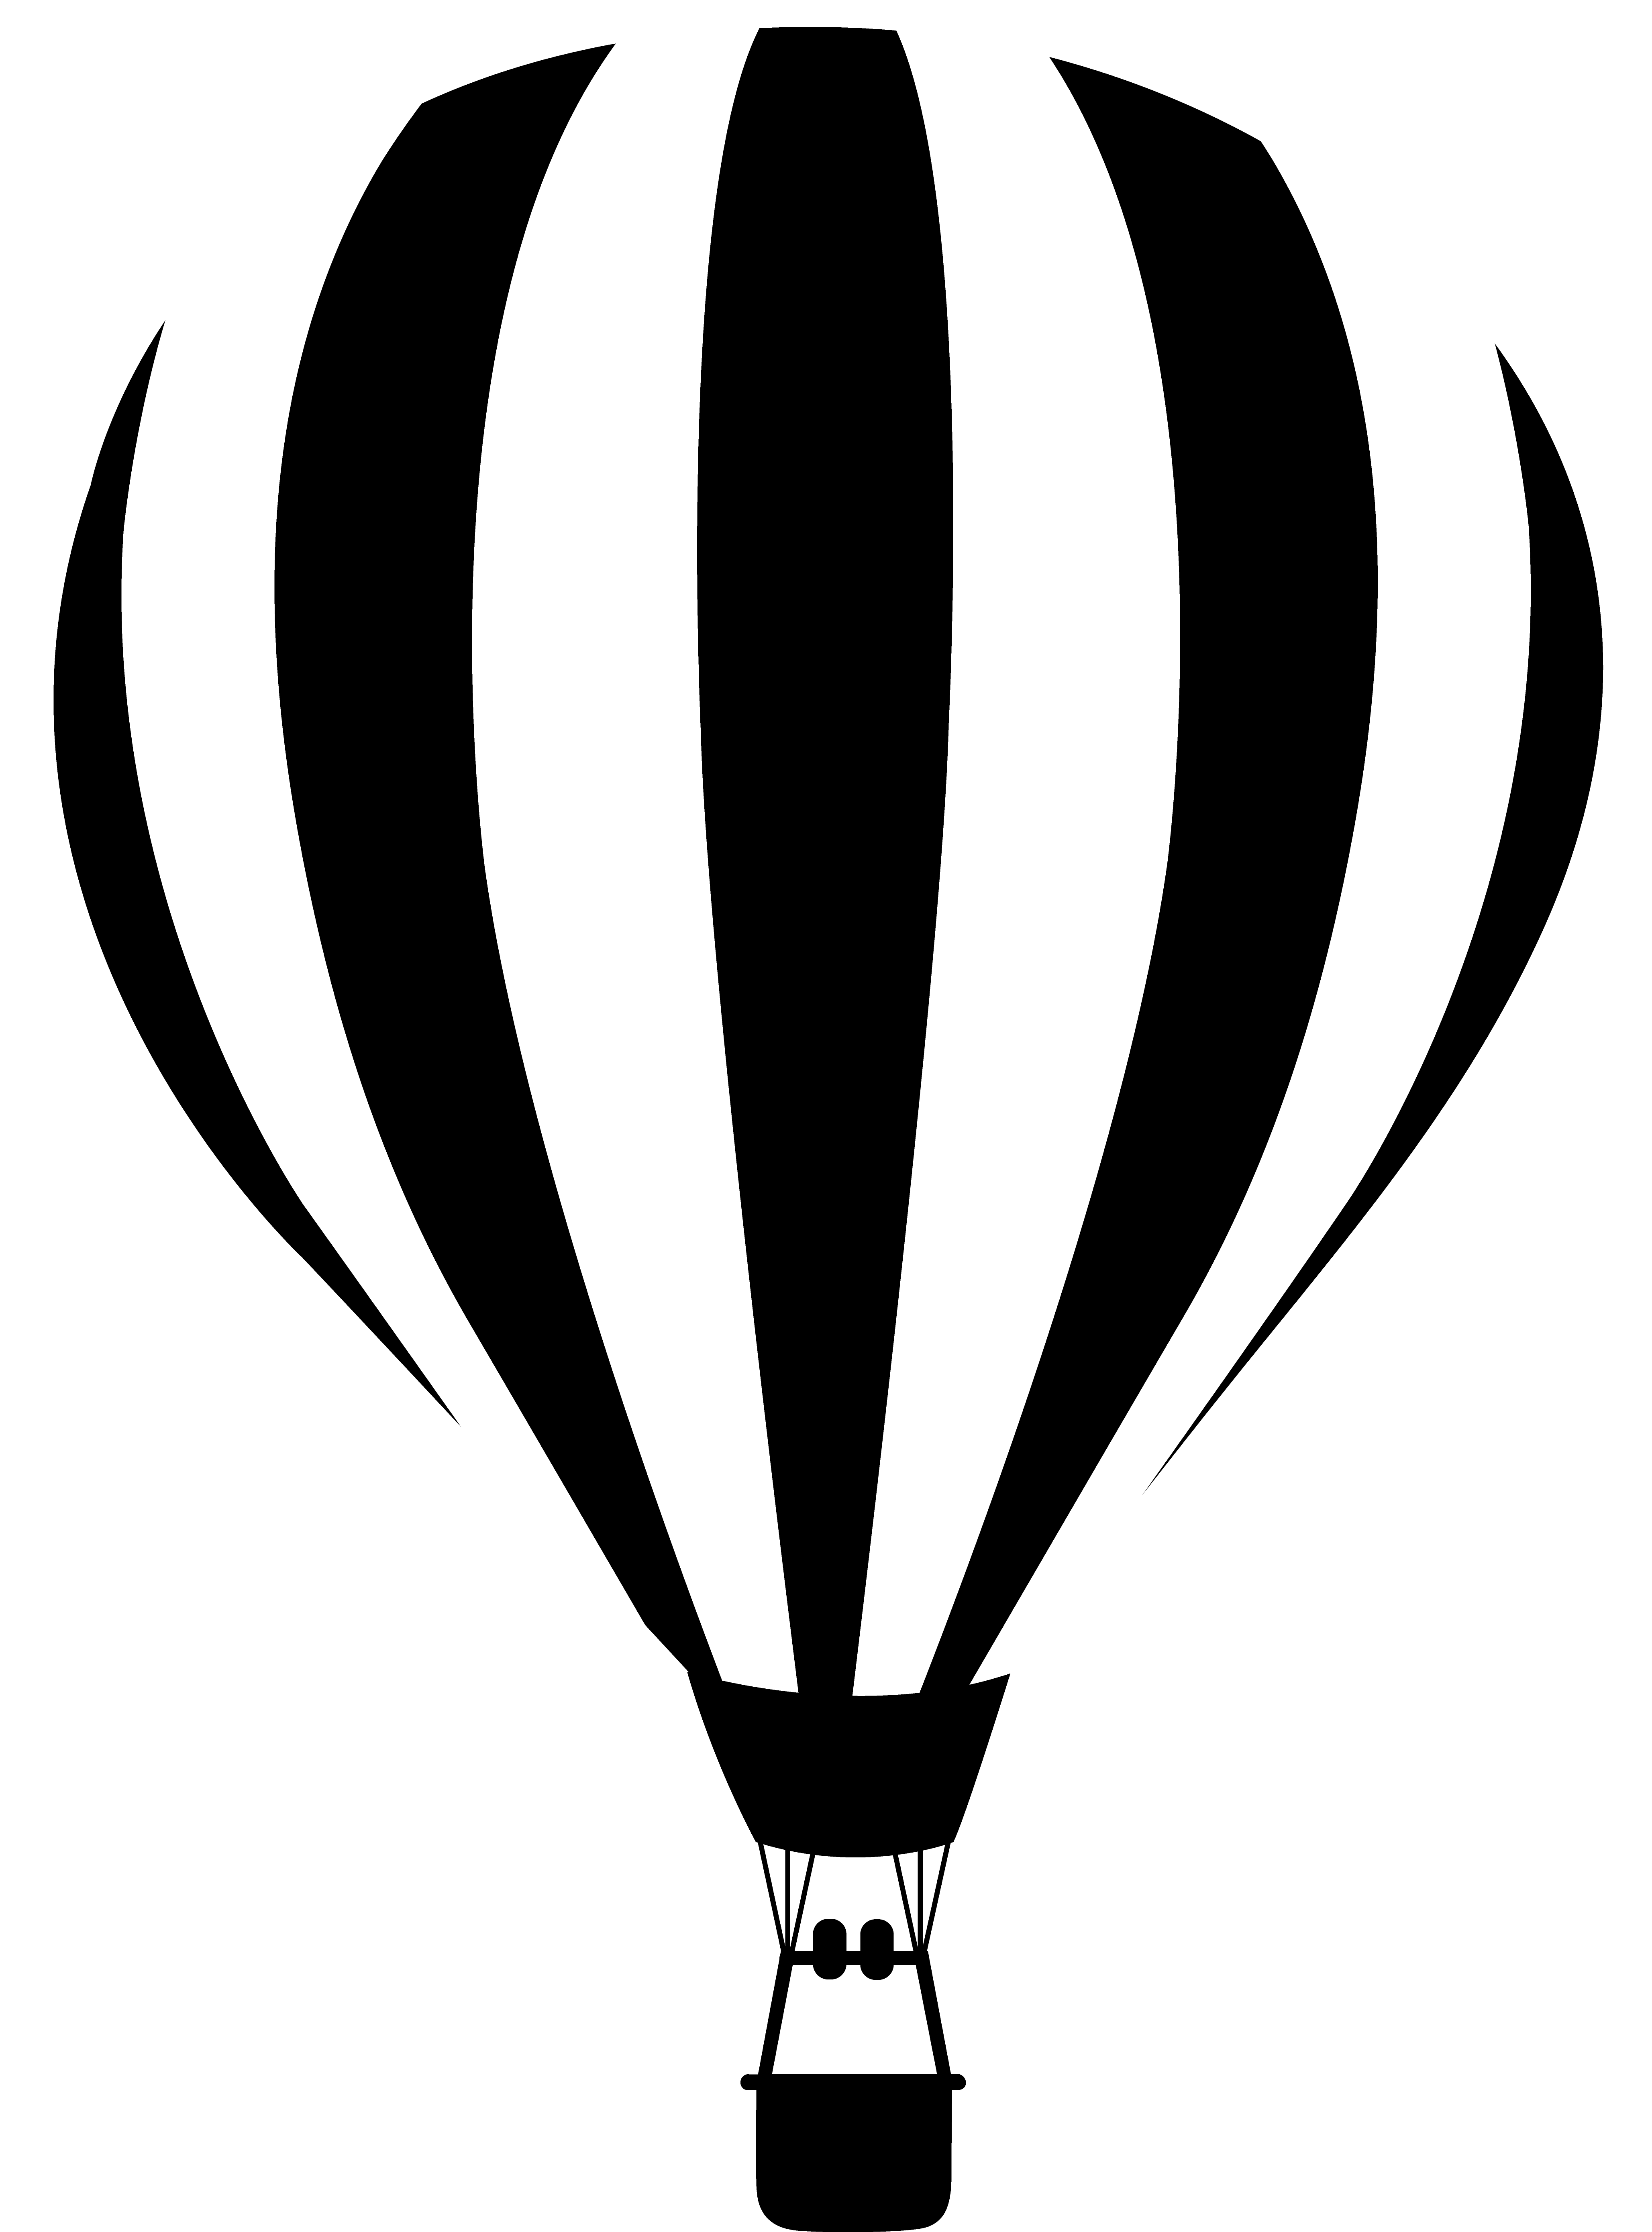 Hot Air Balloon Clipart Black And White | Clipart Panda - Free ...